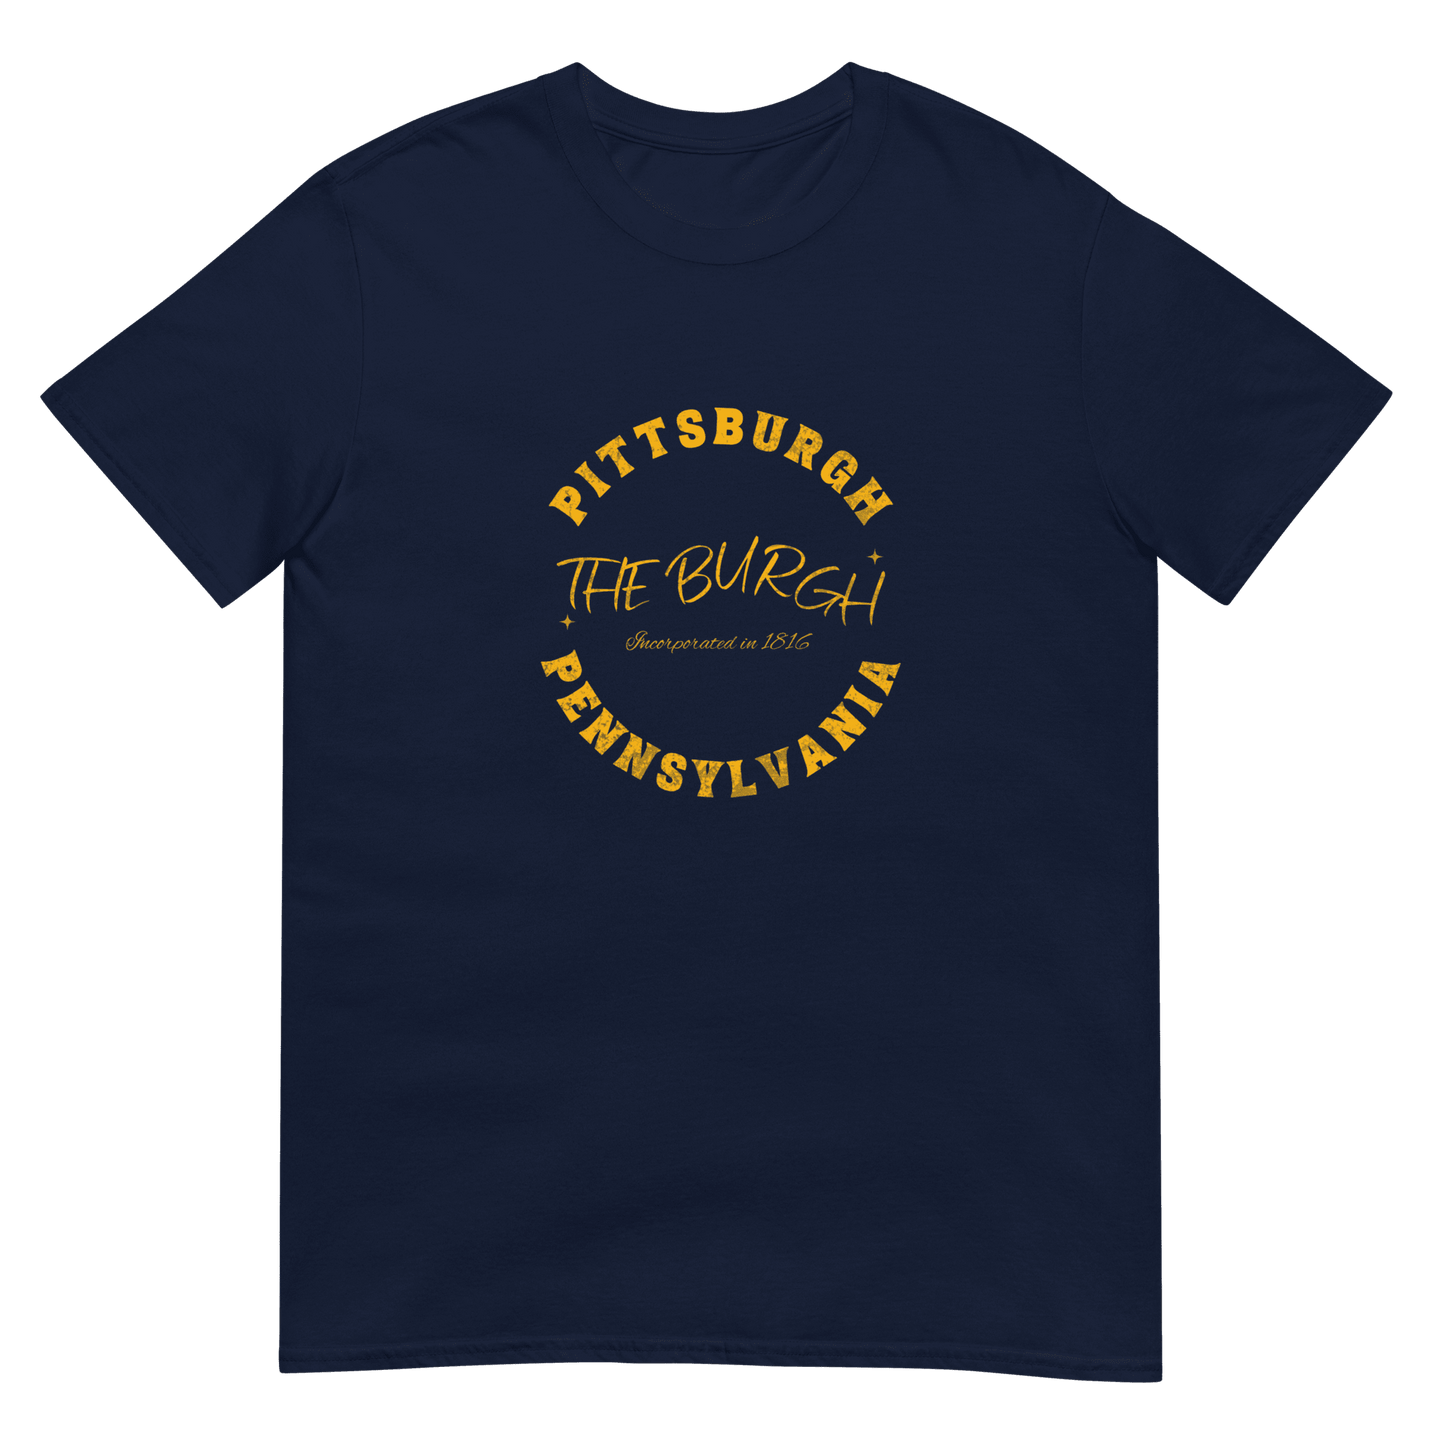 The Burgh Pittsburgh Pennsylvania T-Shirt Yinzergear Navy S 